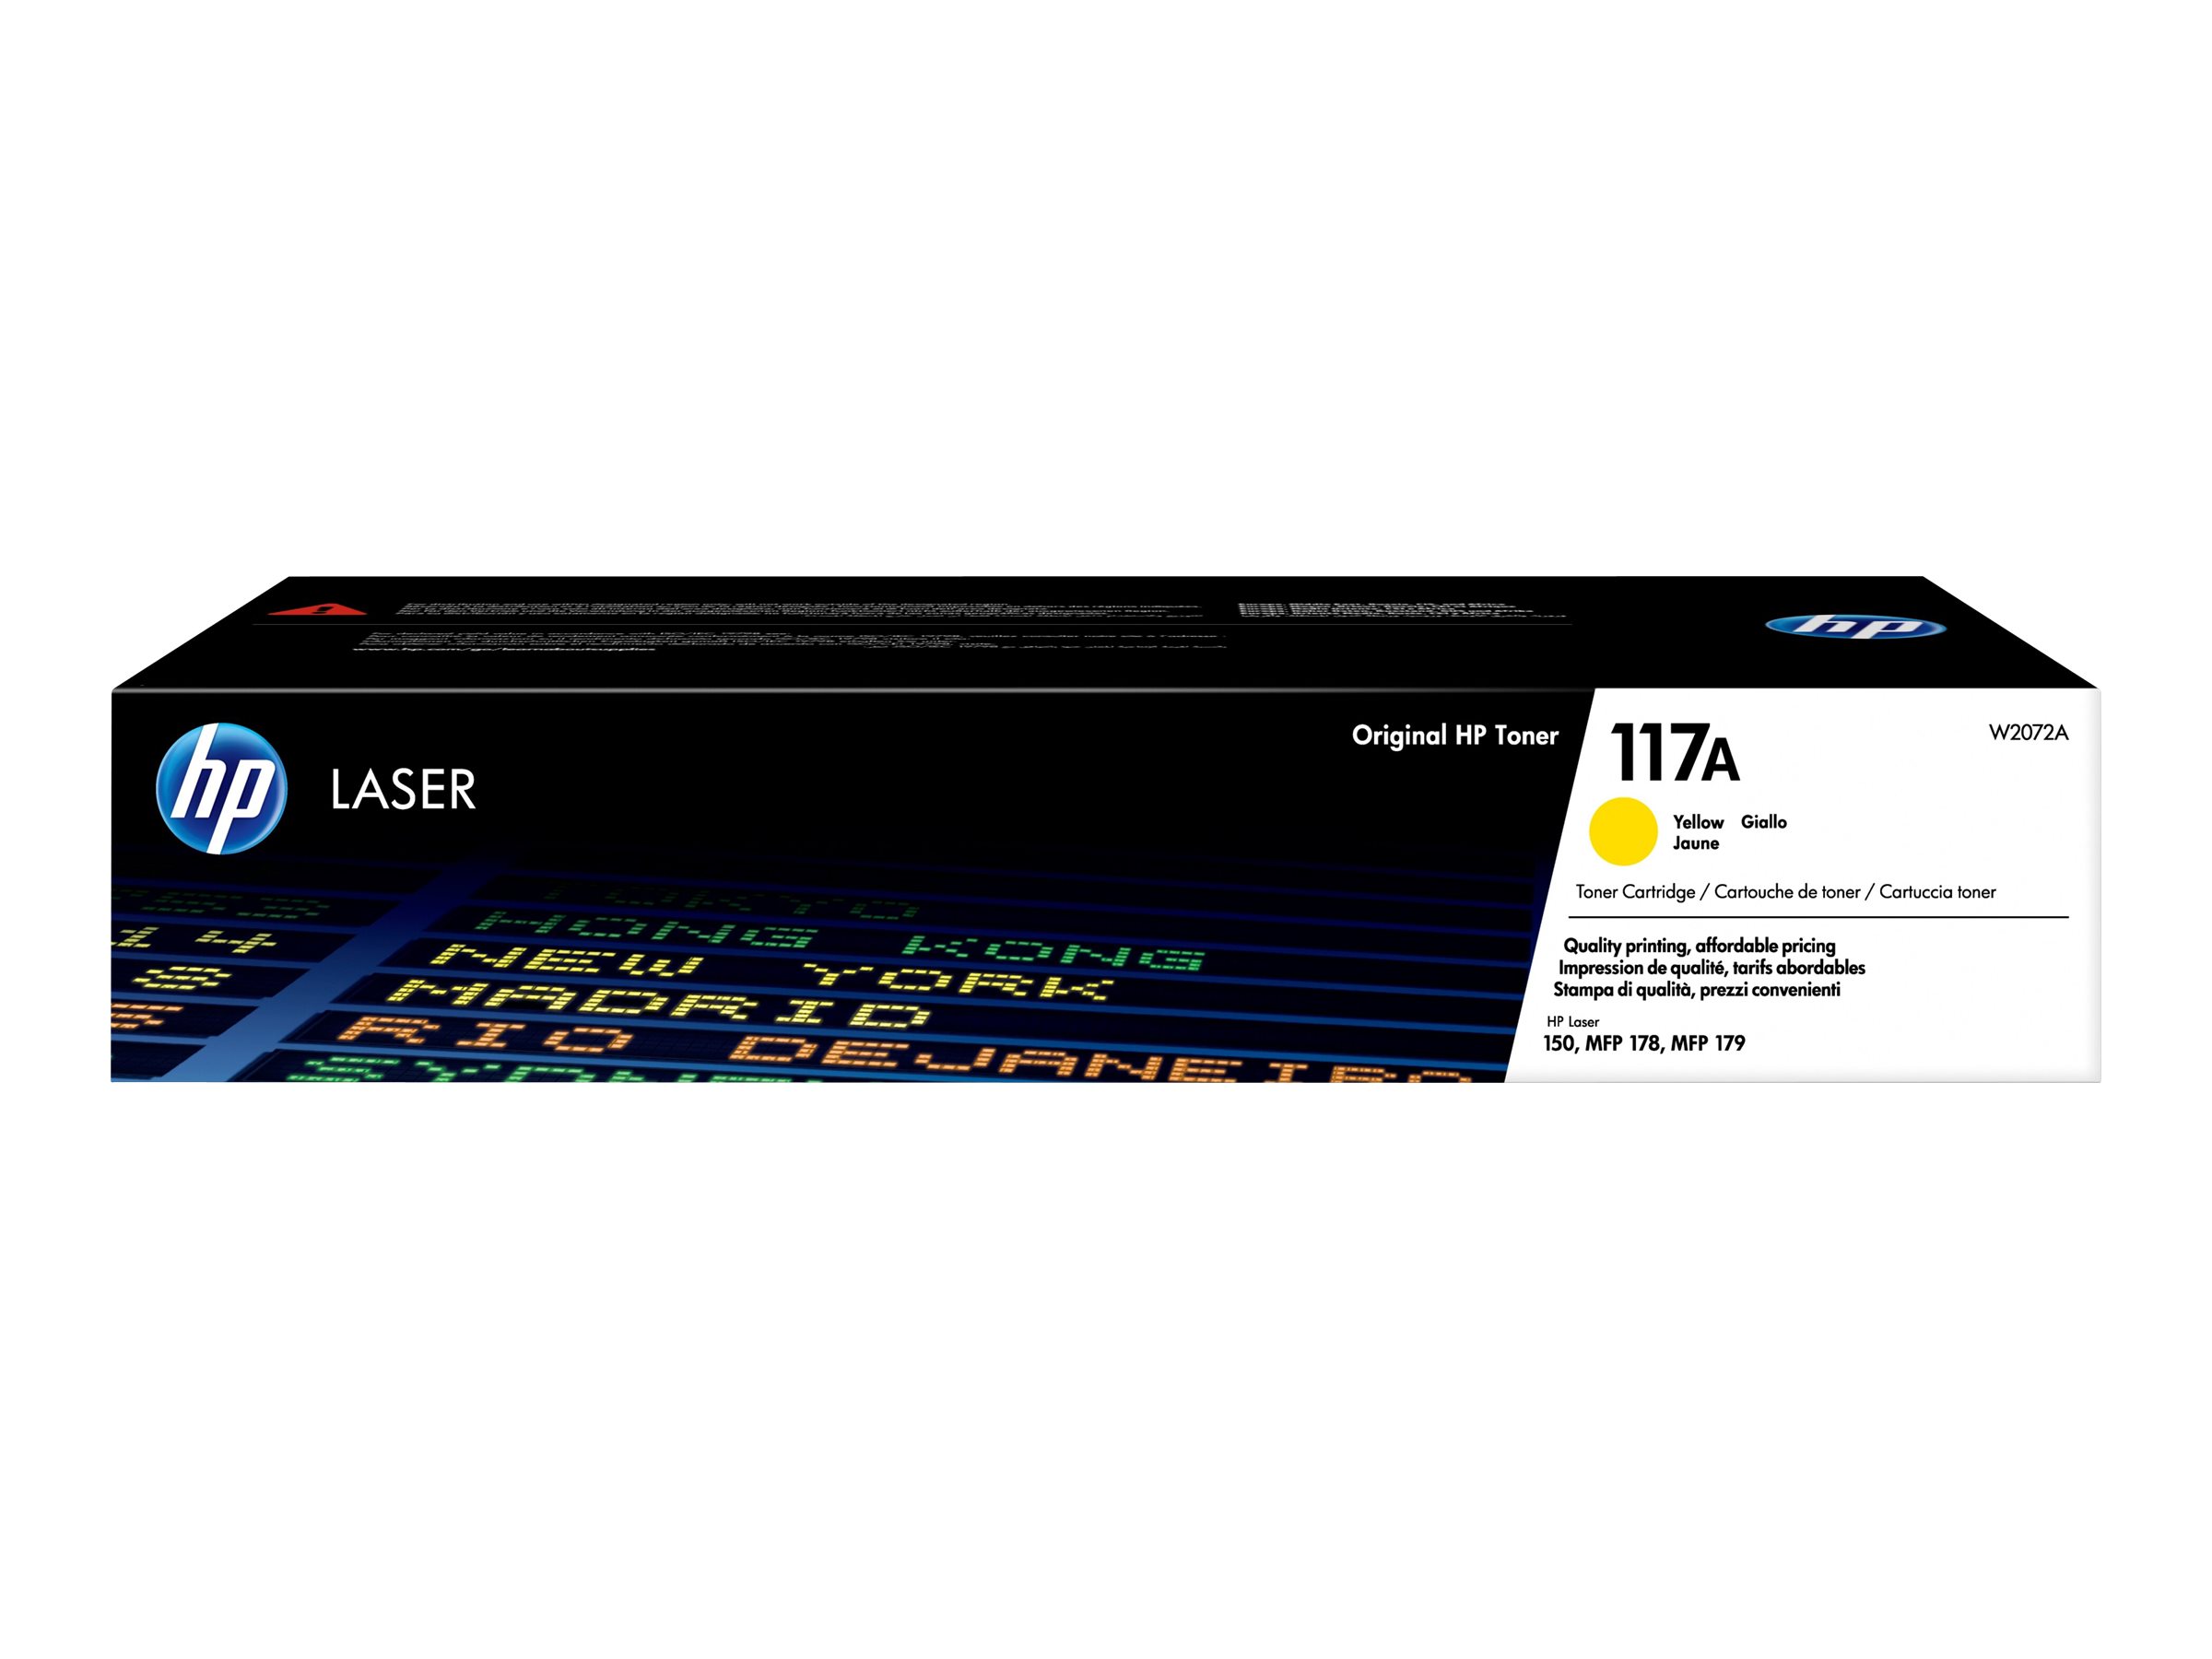 HP 117A Yellow  Laser Toner Cartridge